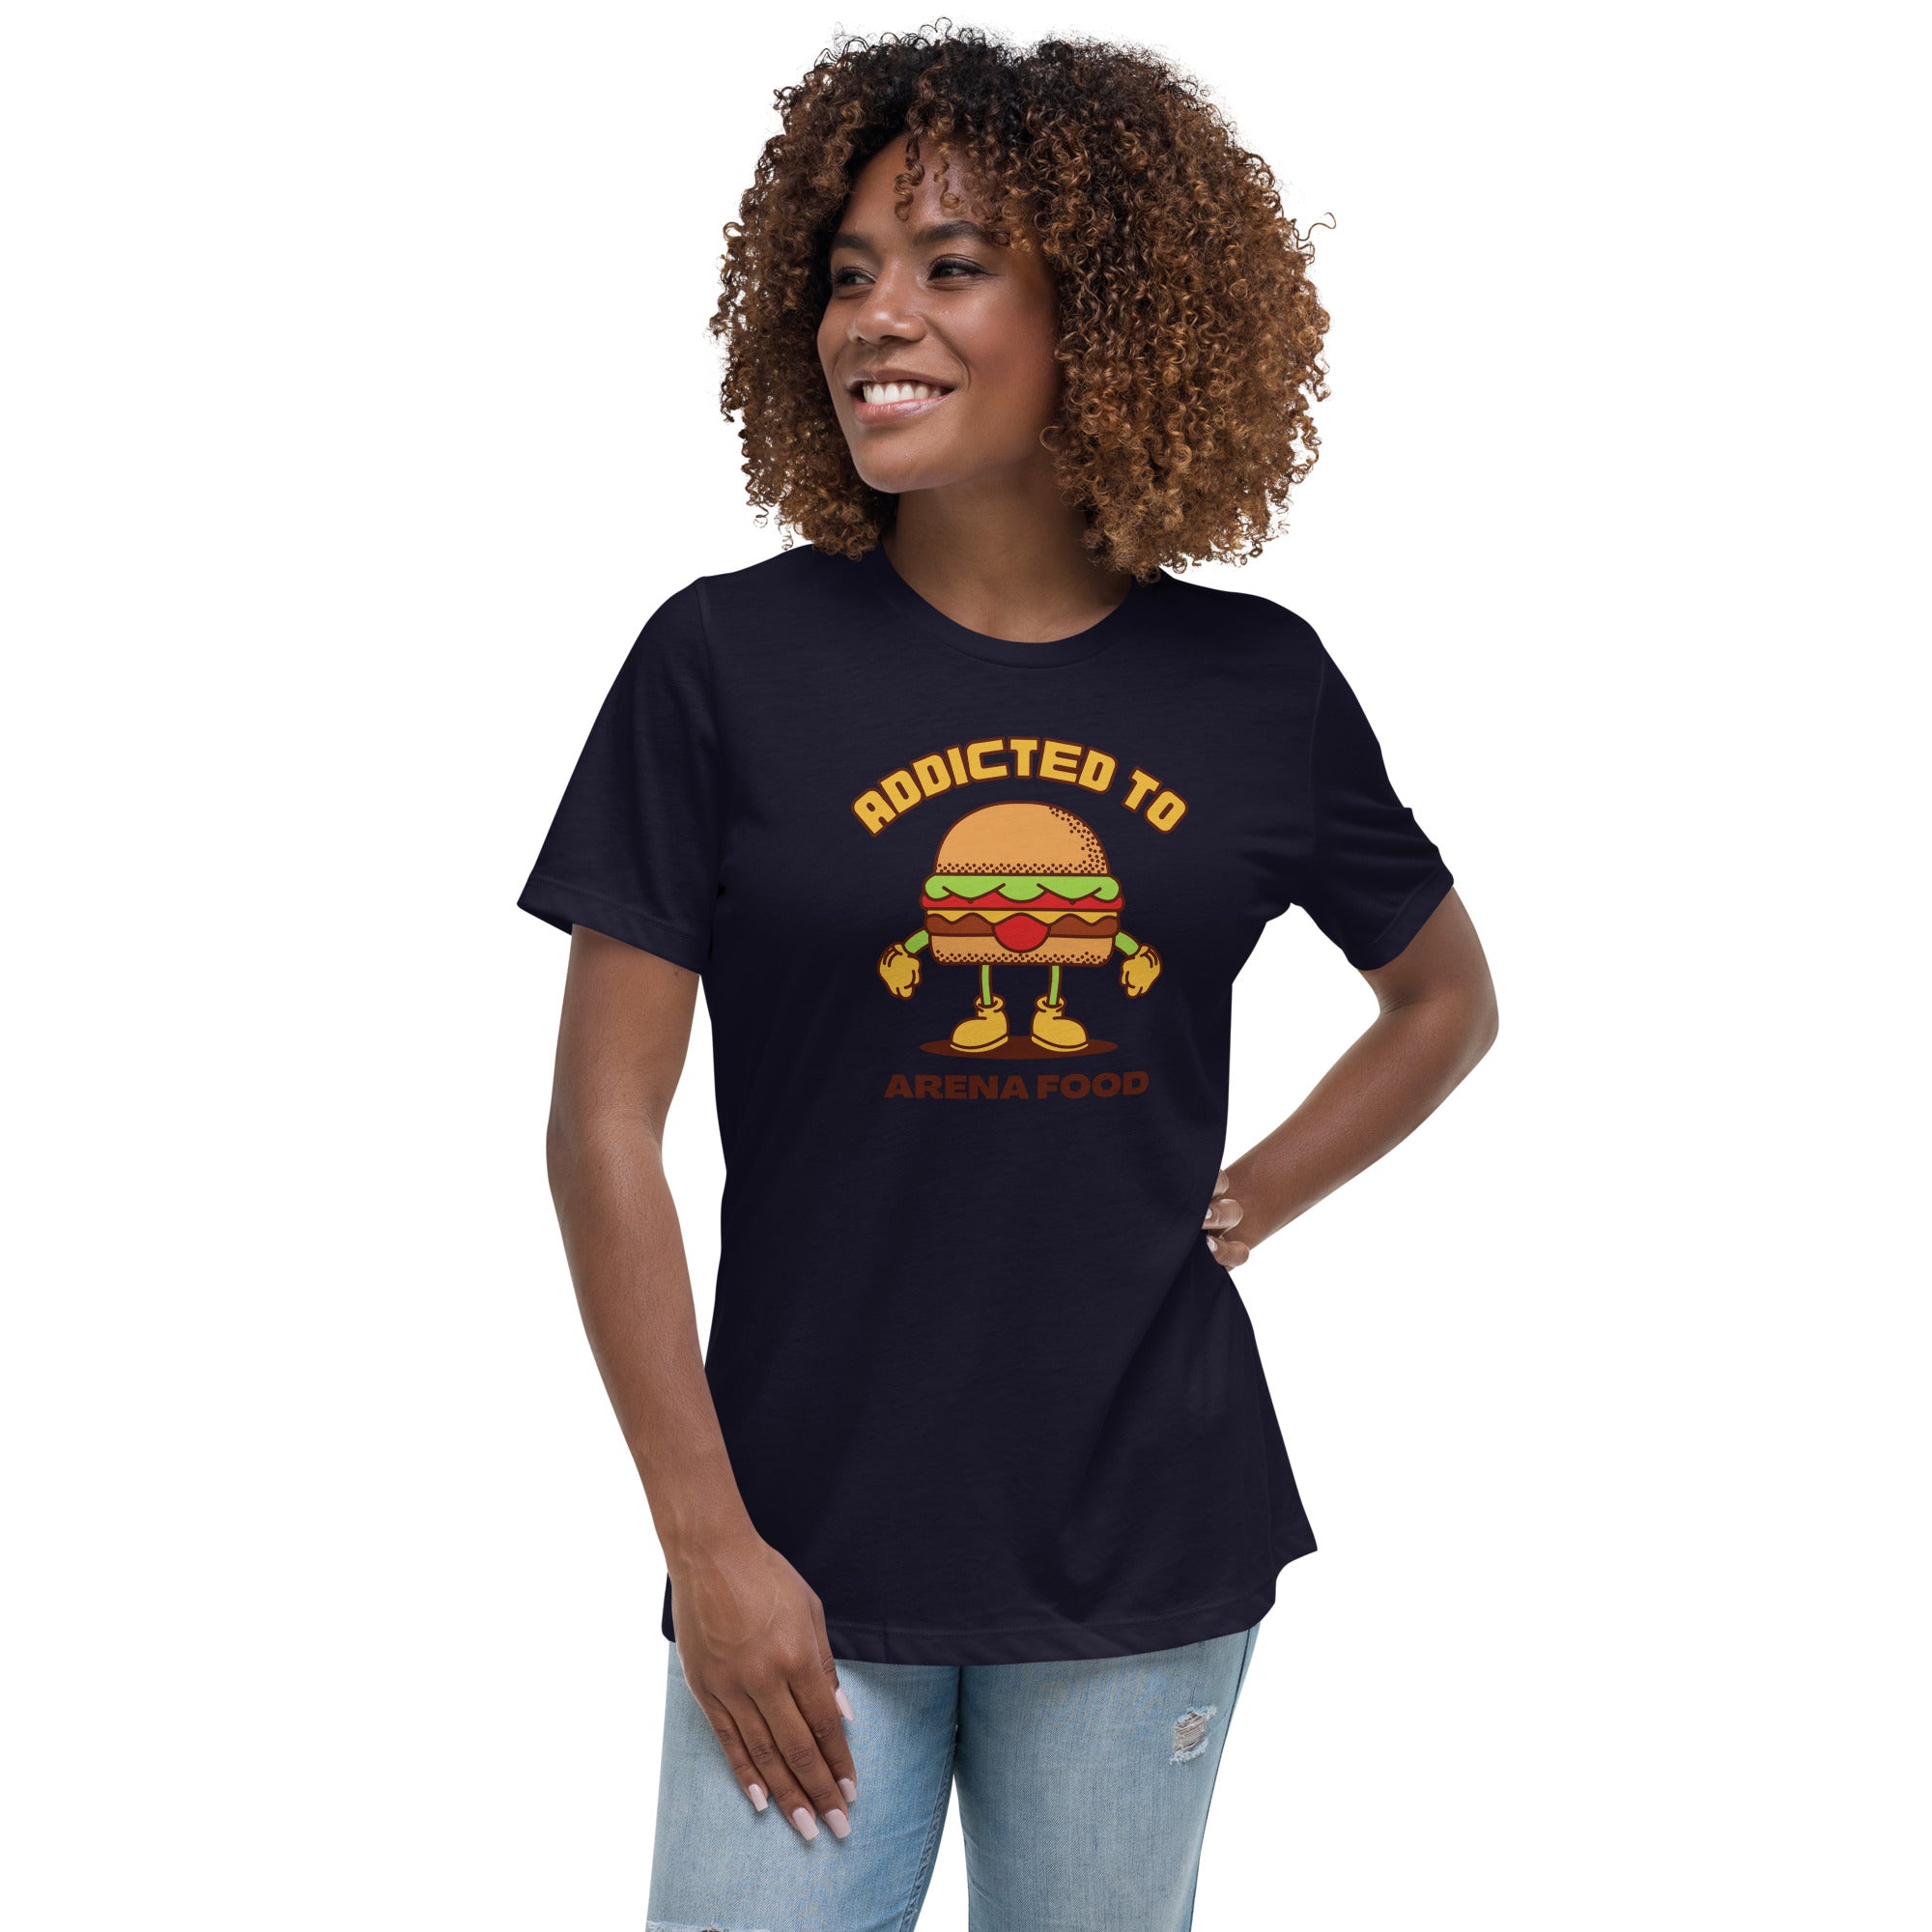 Addicted To Arena Food Women's Premium Fit T-Shirt